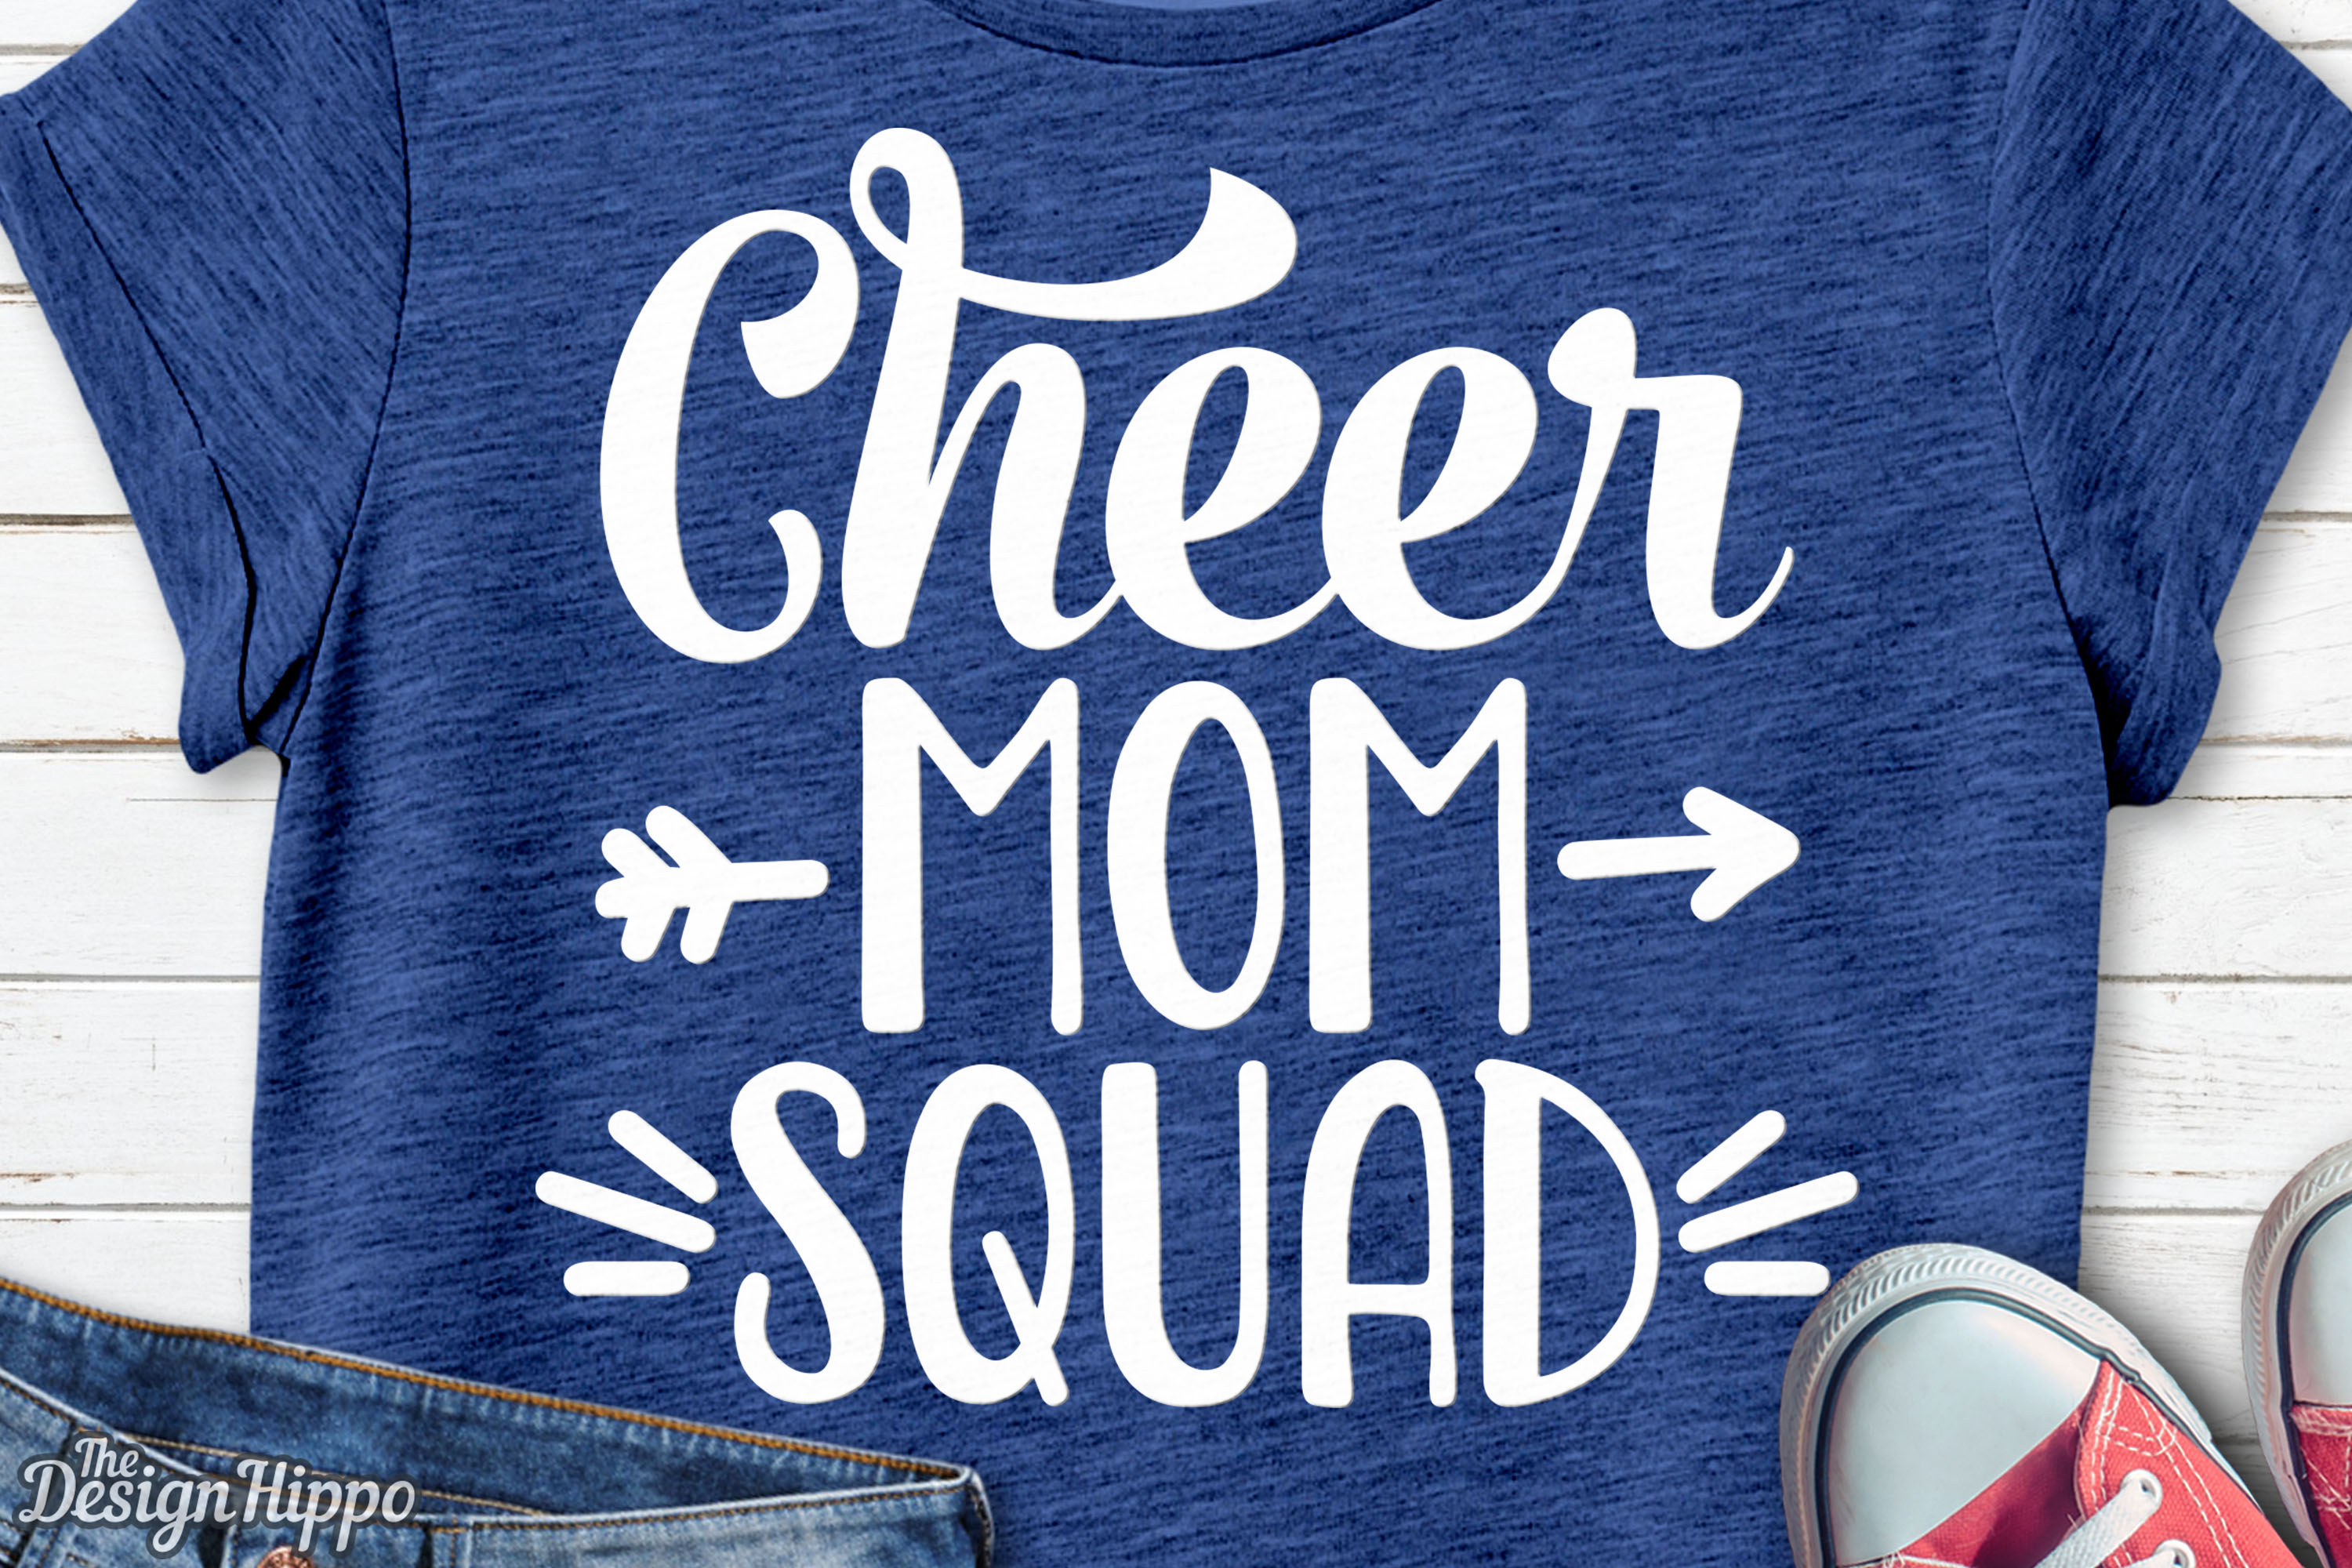 Download Cheer mom squad svg, Cheer svg, Mom svg, Squad svg, PNG, DXF